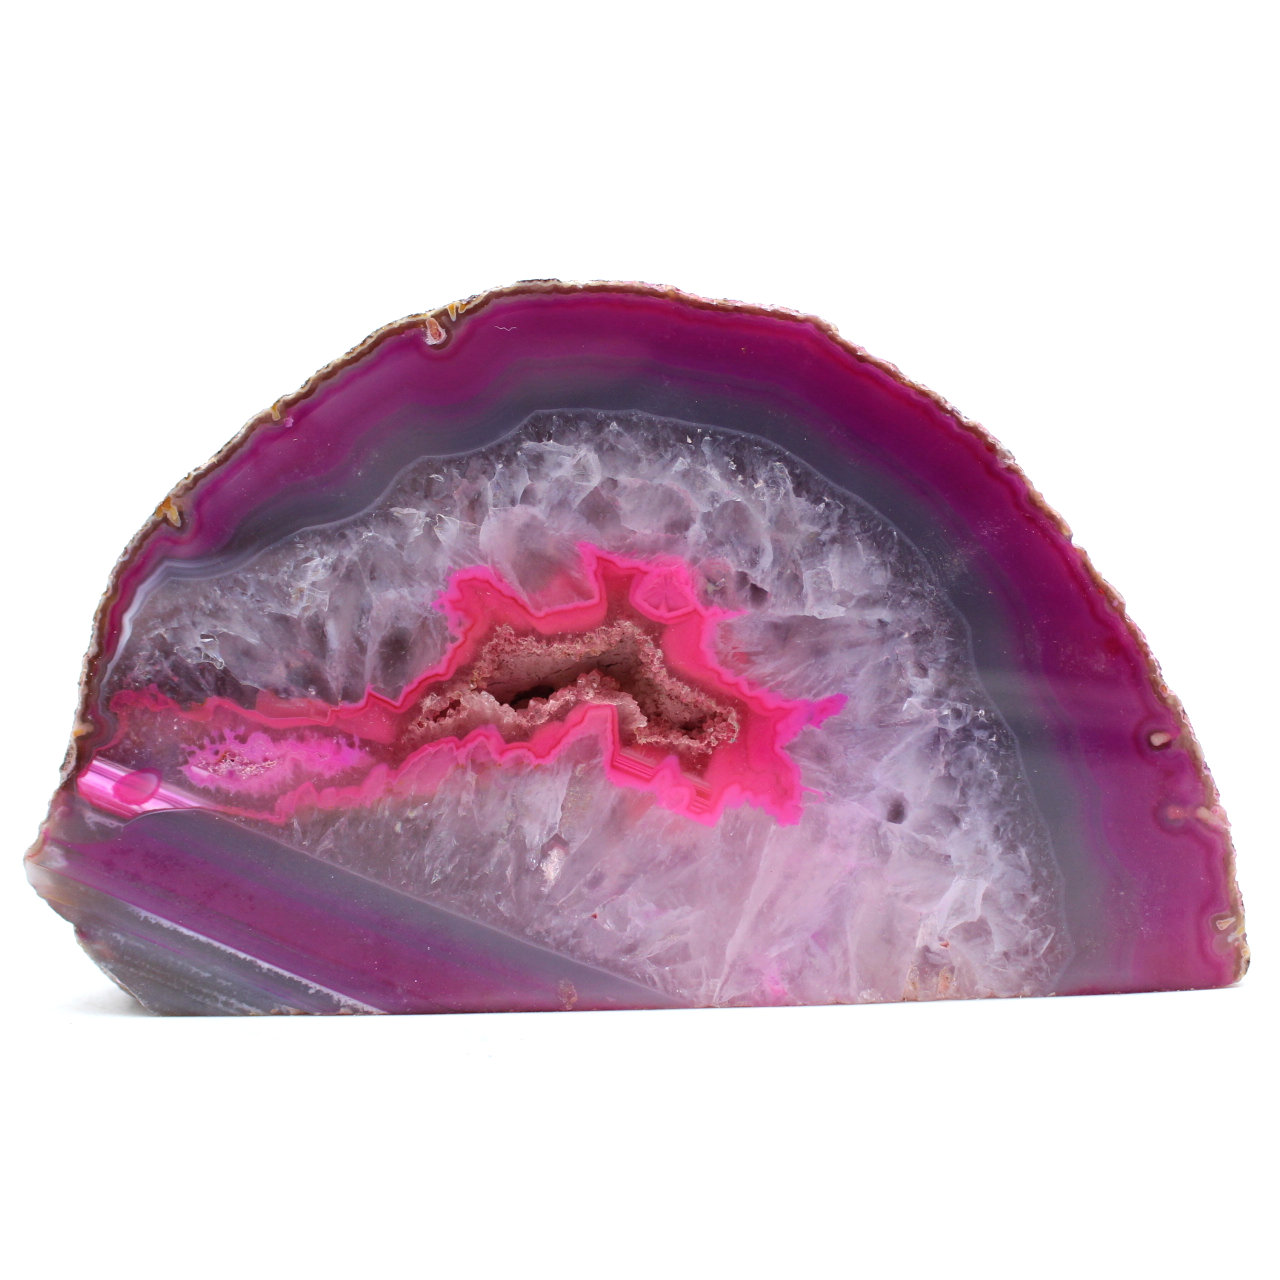 piedra de ágata rosa de brasil